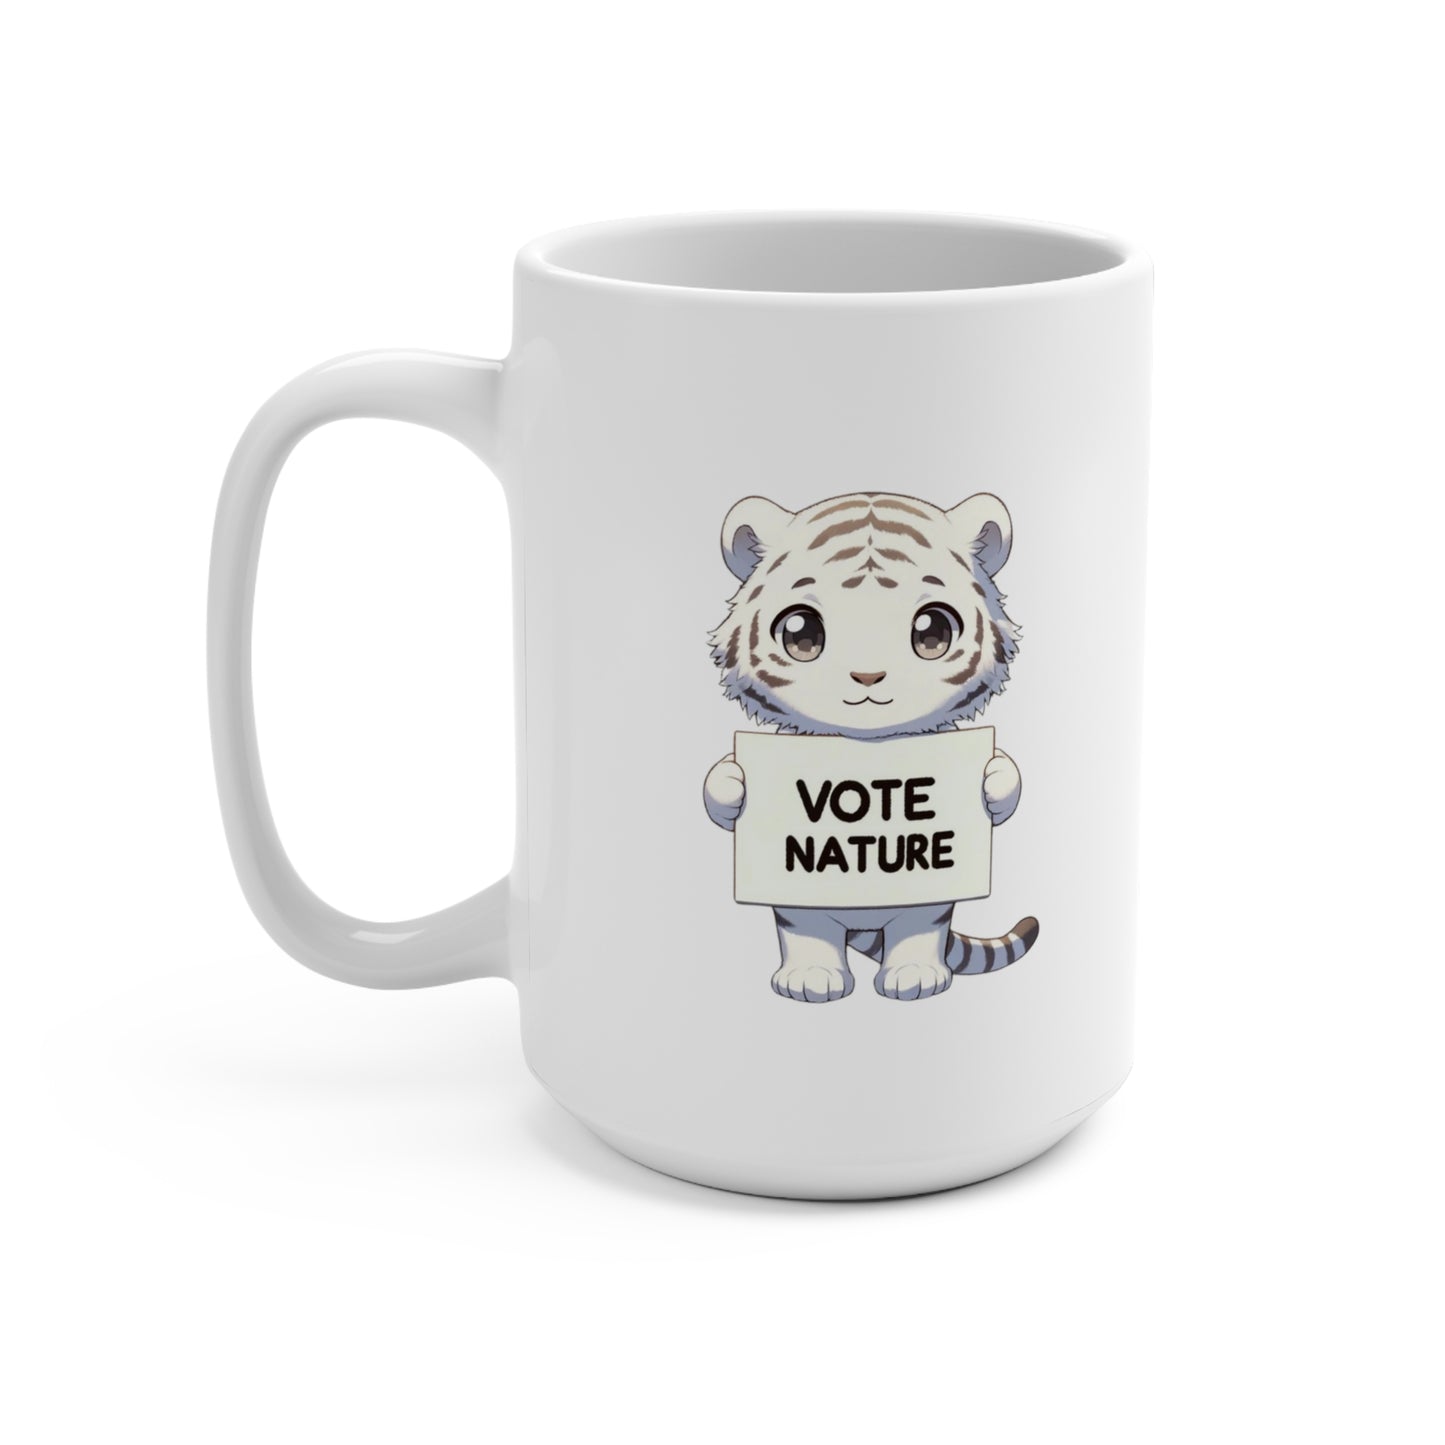 Inspirational Cute White Tiger Statement Coffee Mug (15oz): Vote Nature! Be a cute activist tiger!